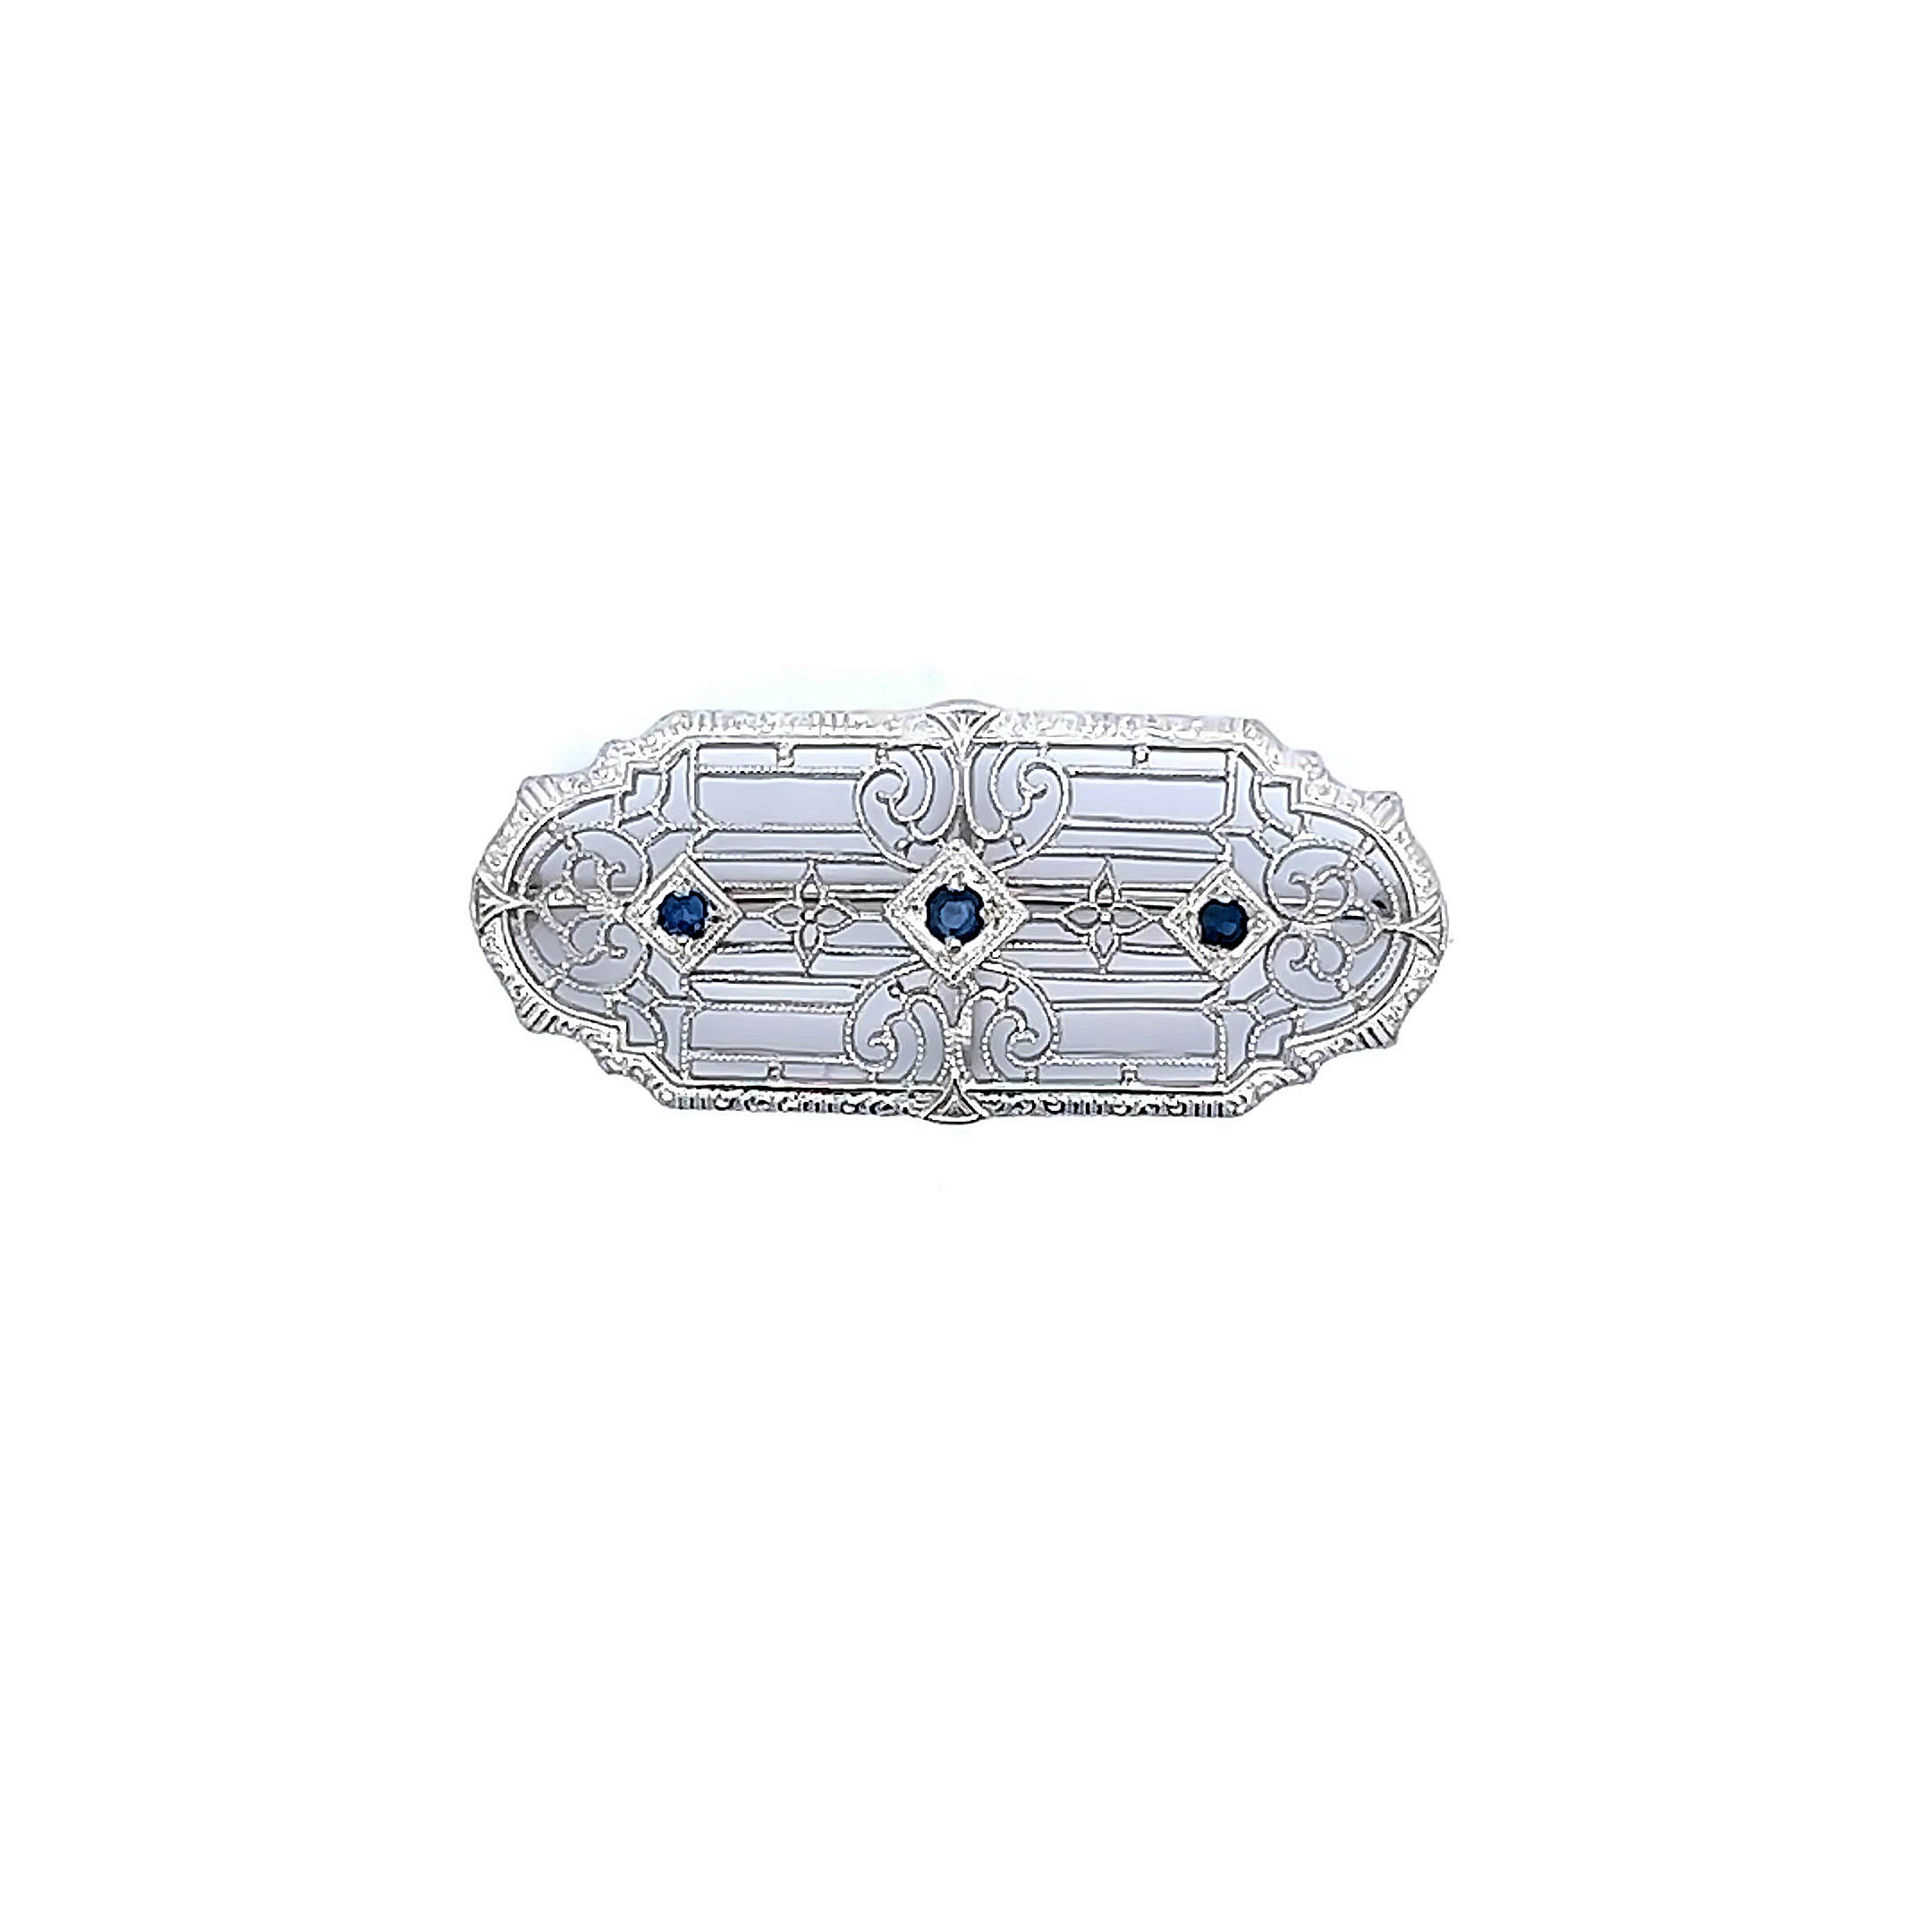 White 14 Karat Filigree Pin with three 2.0 MM round blue sapphires.